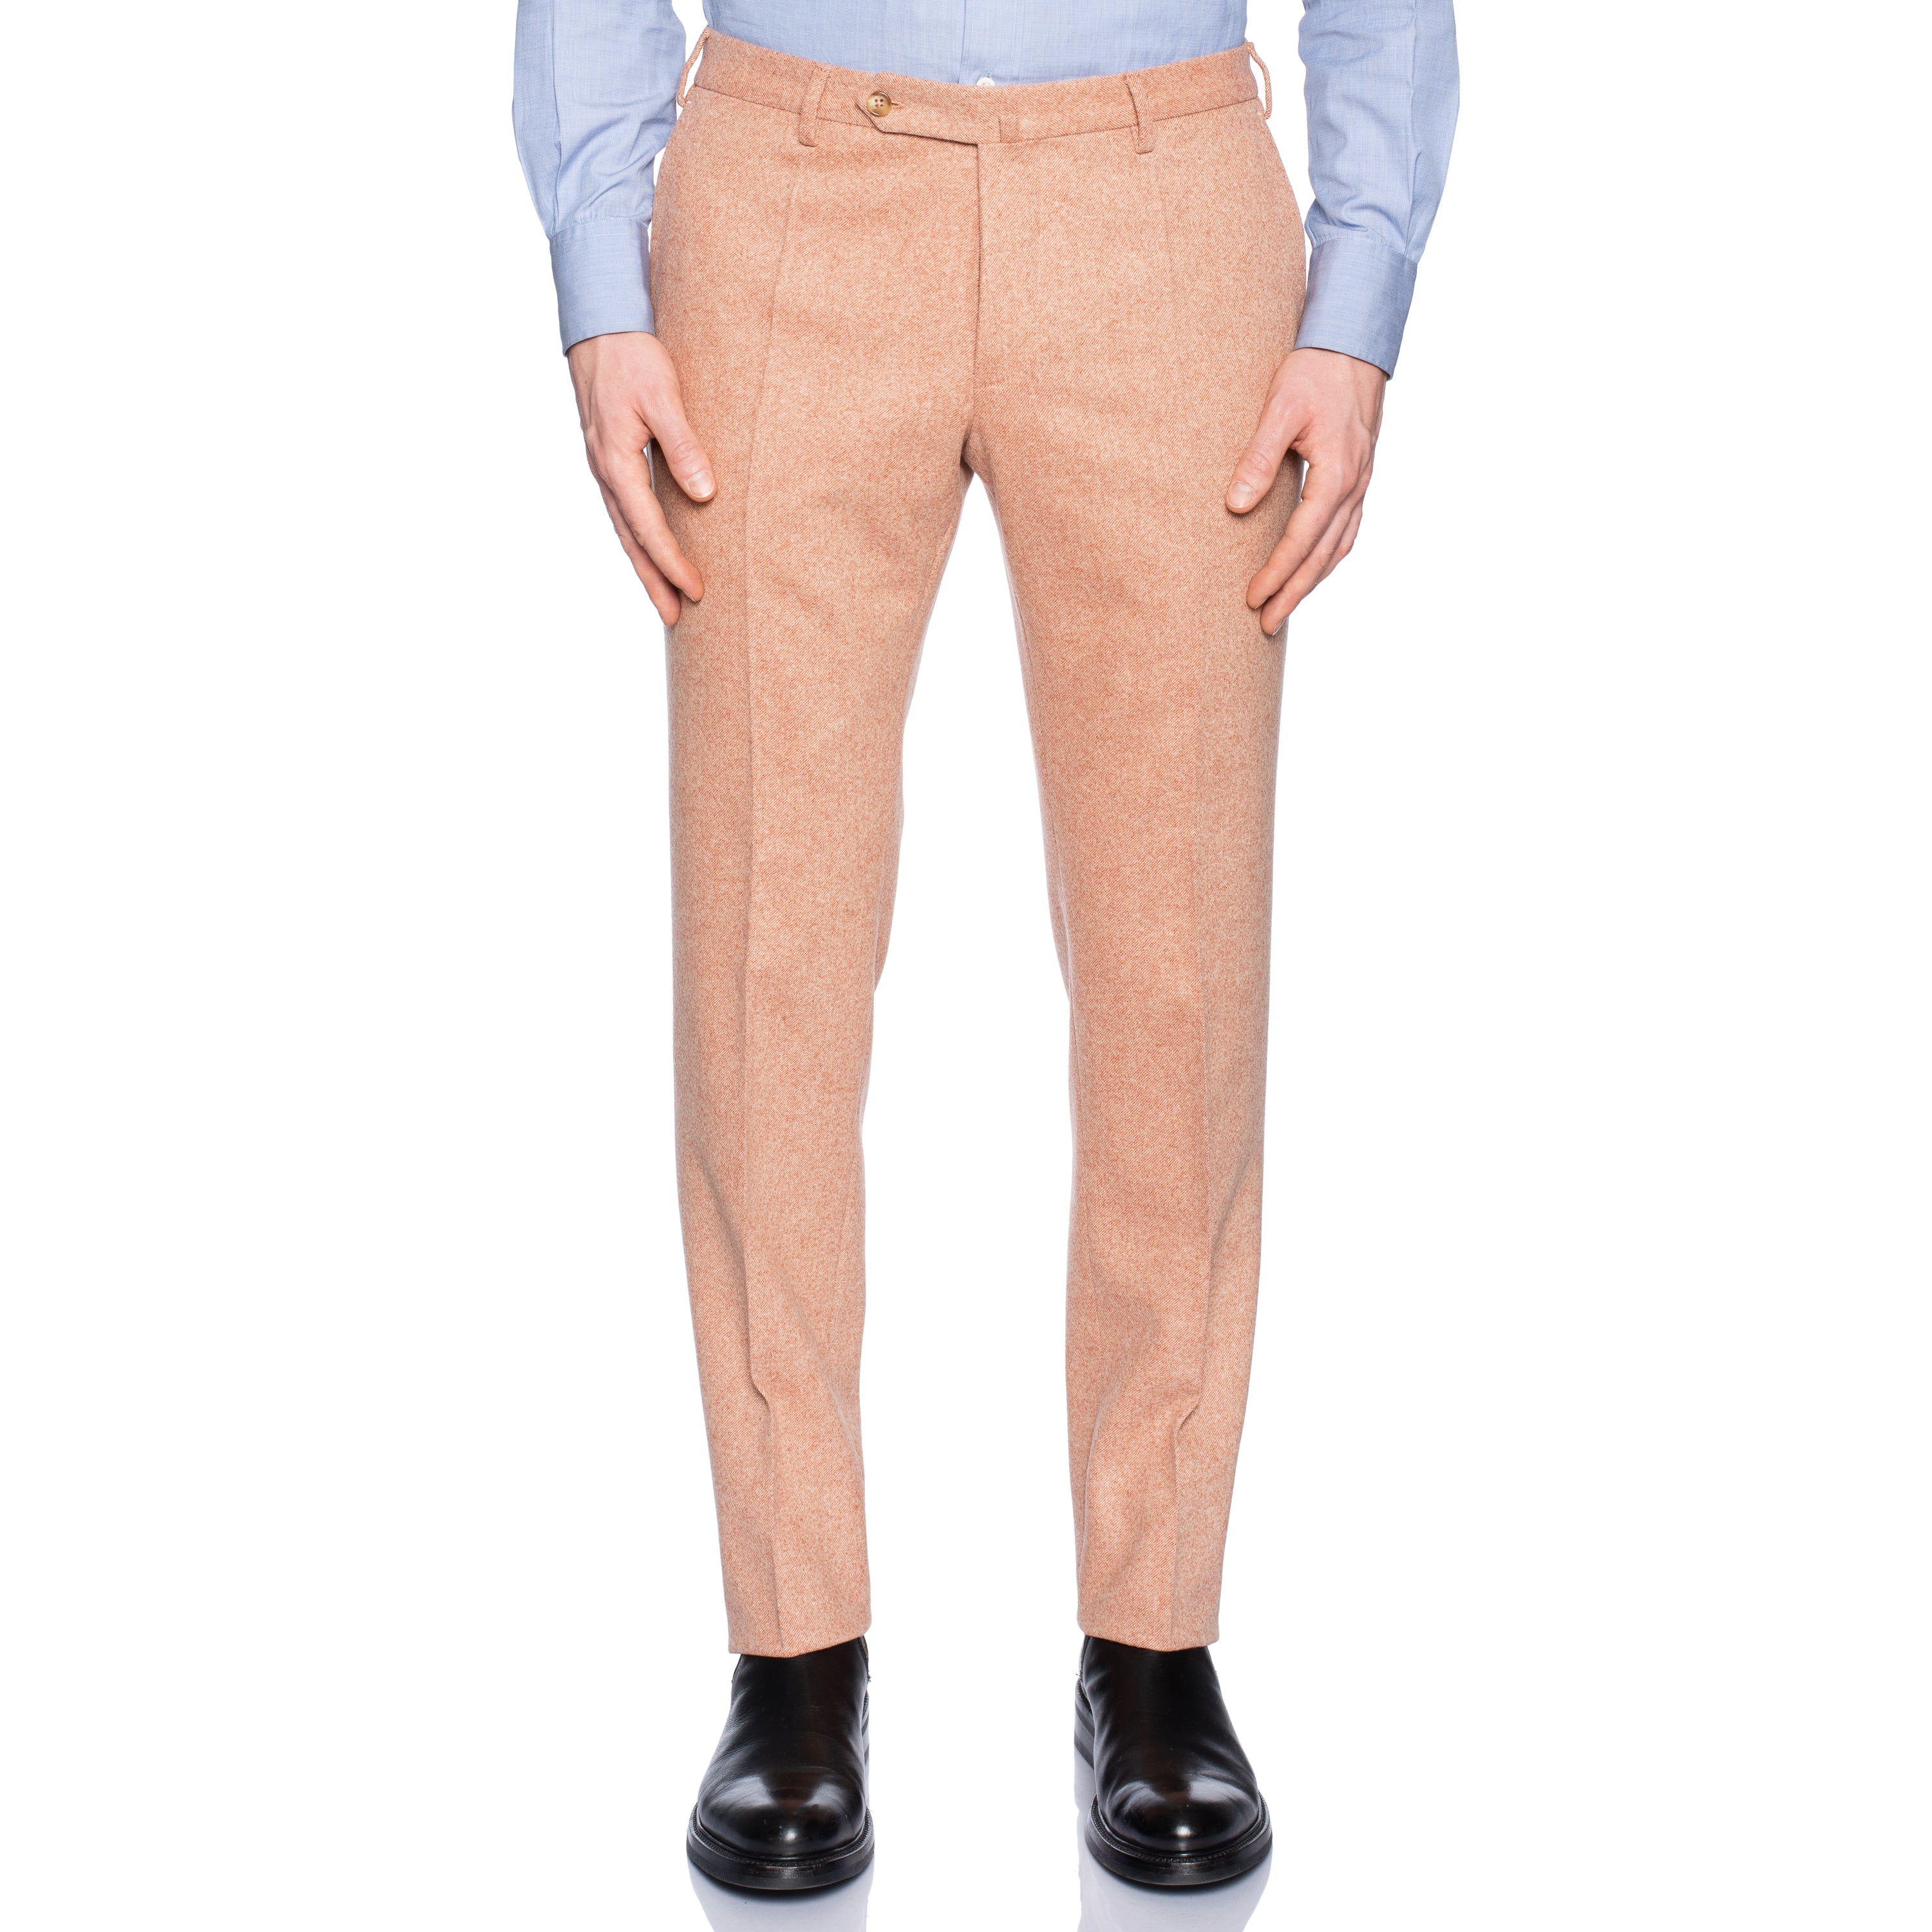 INCOTEX (Slowear) Light Salmon Color Wool Flannel Pants NEW Slim Fit INCOTEX